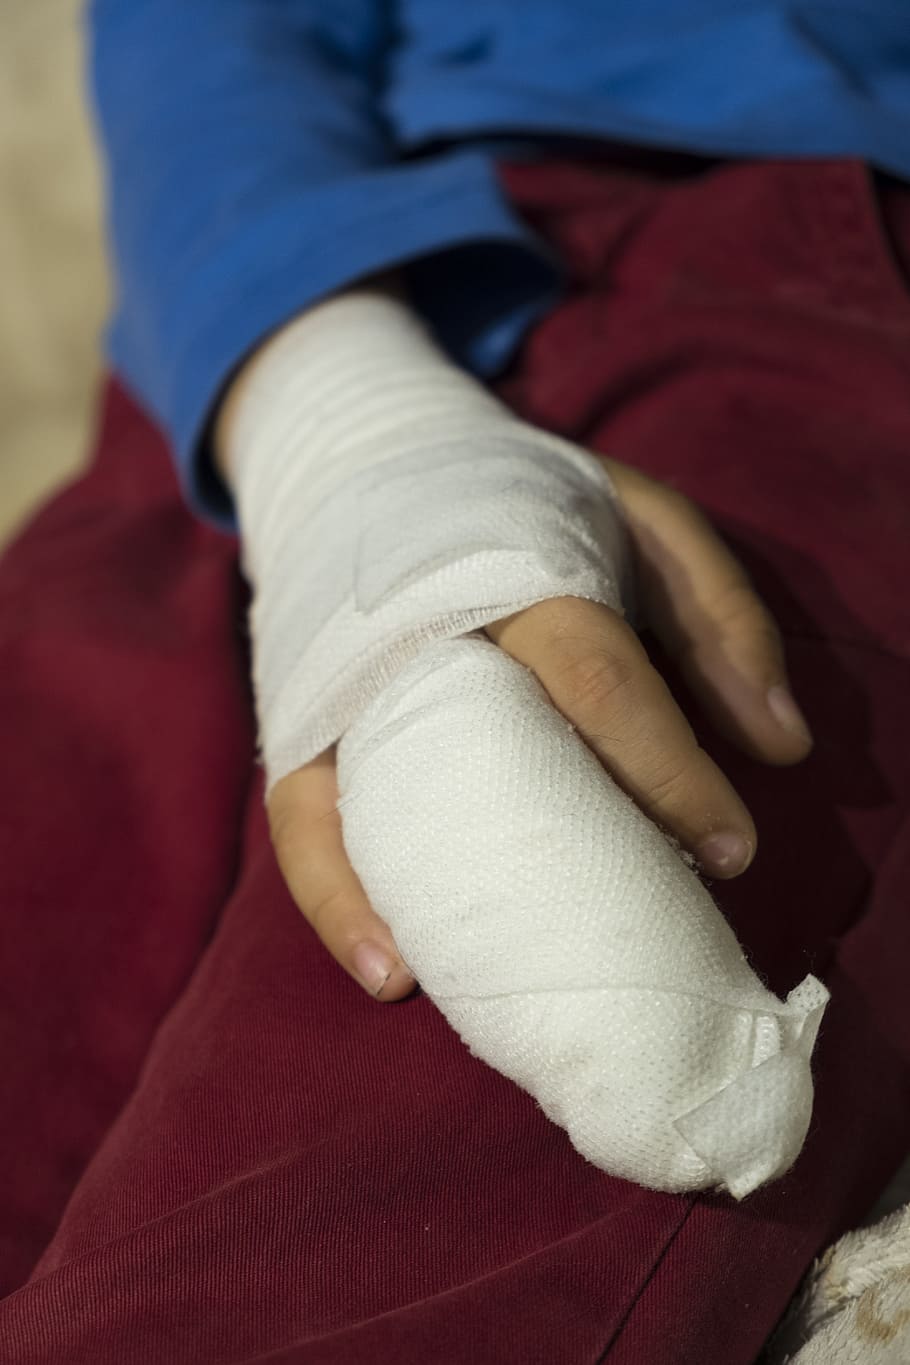 person, wearing, white, hand cast, child, boy, injury, injured, association, bandages